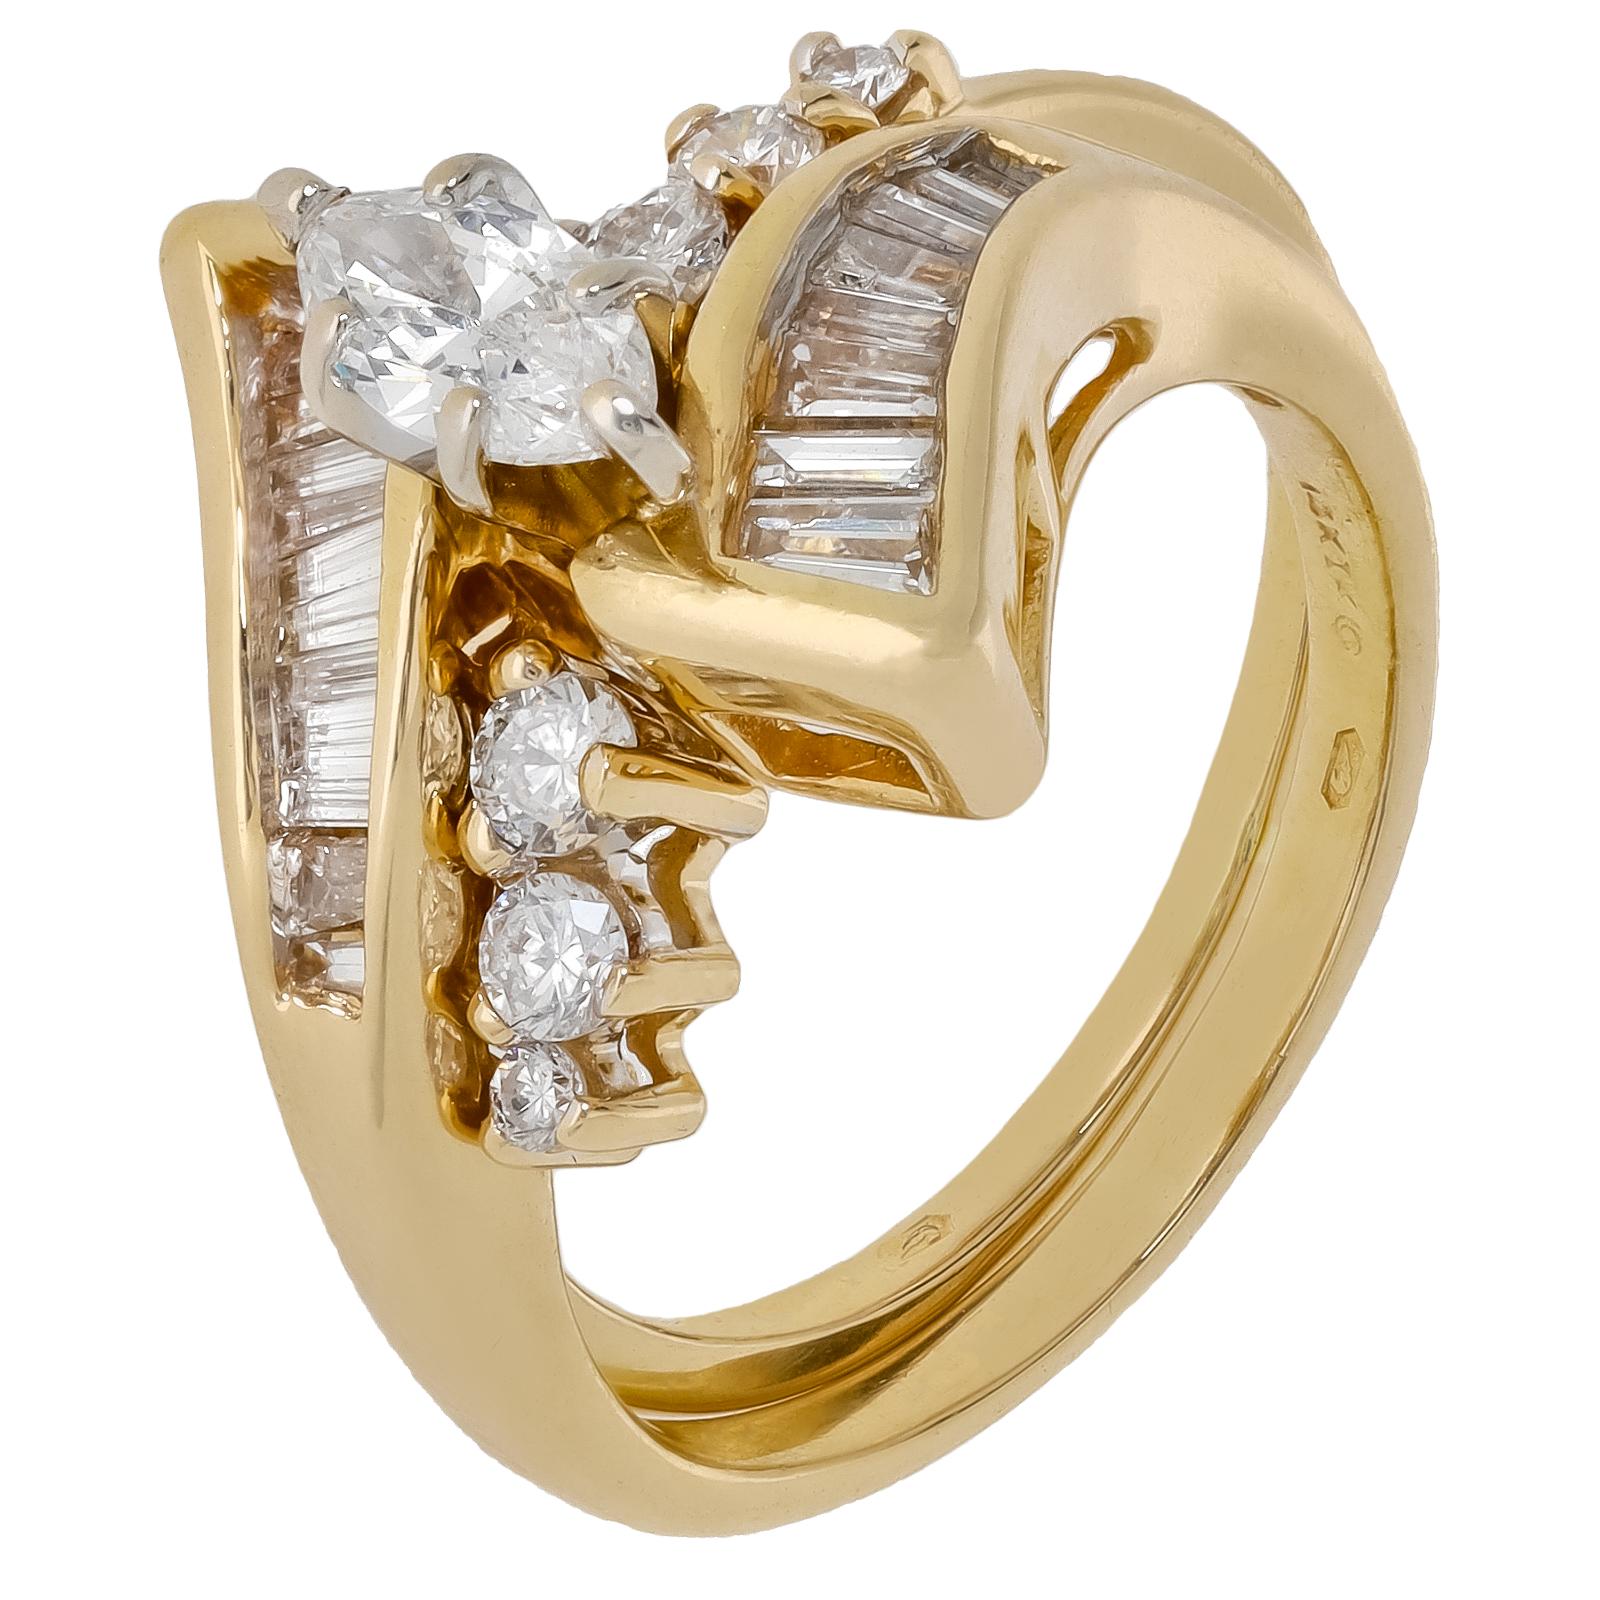 Zlatý prsteň s briliantmi 14kt 6.45g vel.51 0.80ct Si2 J 000141412137 - Šperky